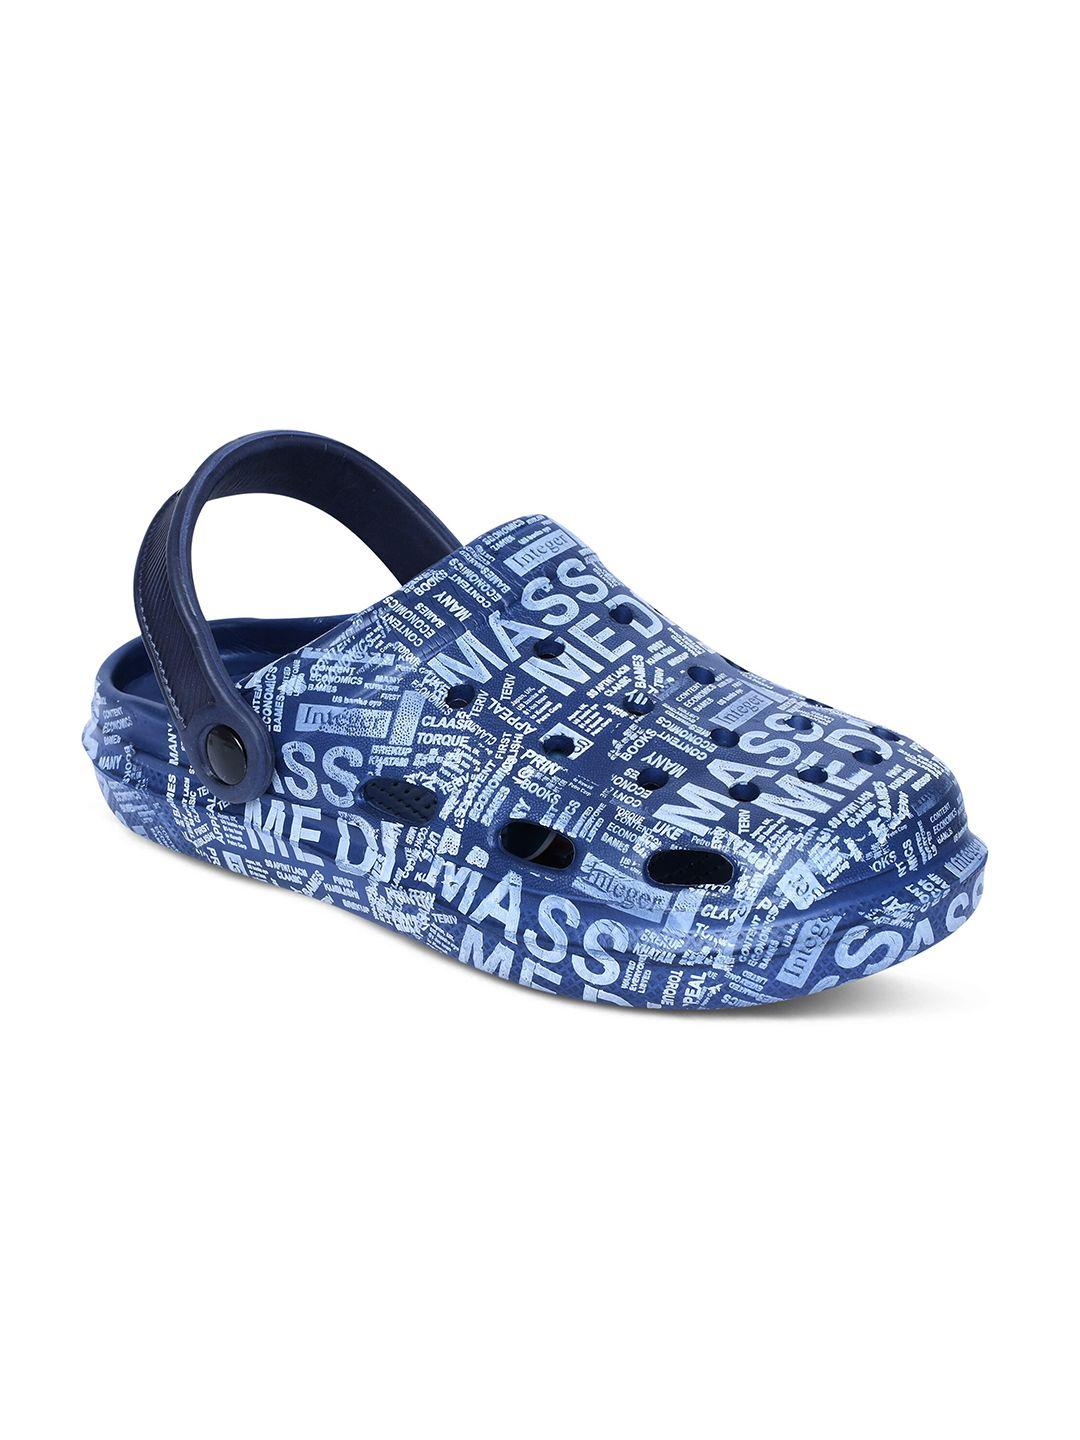 airspot-unisex-navy-blue-clogs-sandals